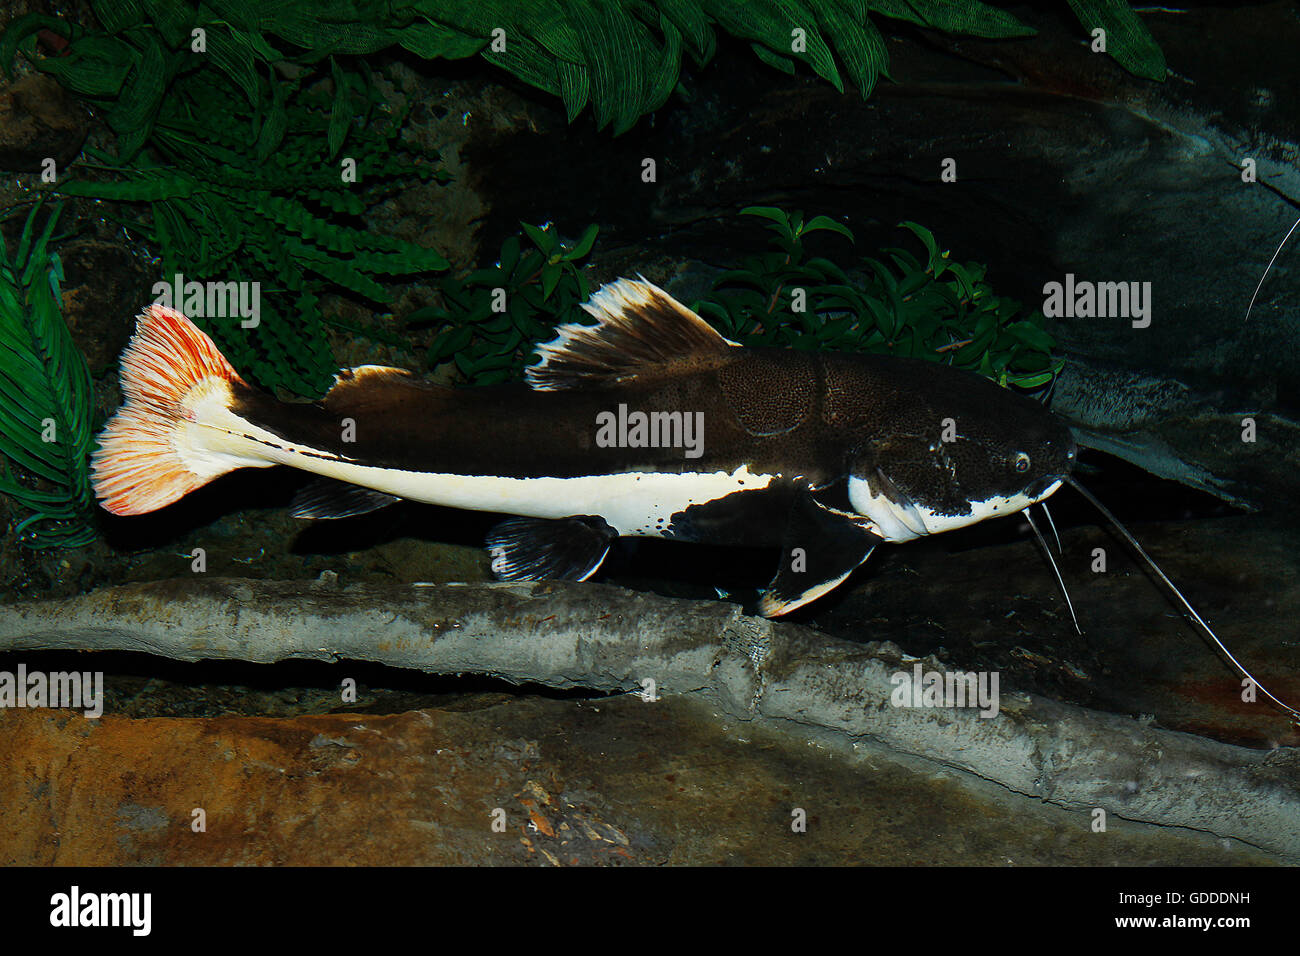 Red-Tail Catfish, phractocephalus hemioliopterus, Adult Stock Photo